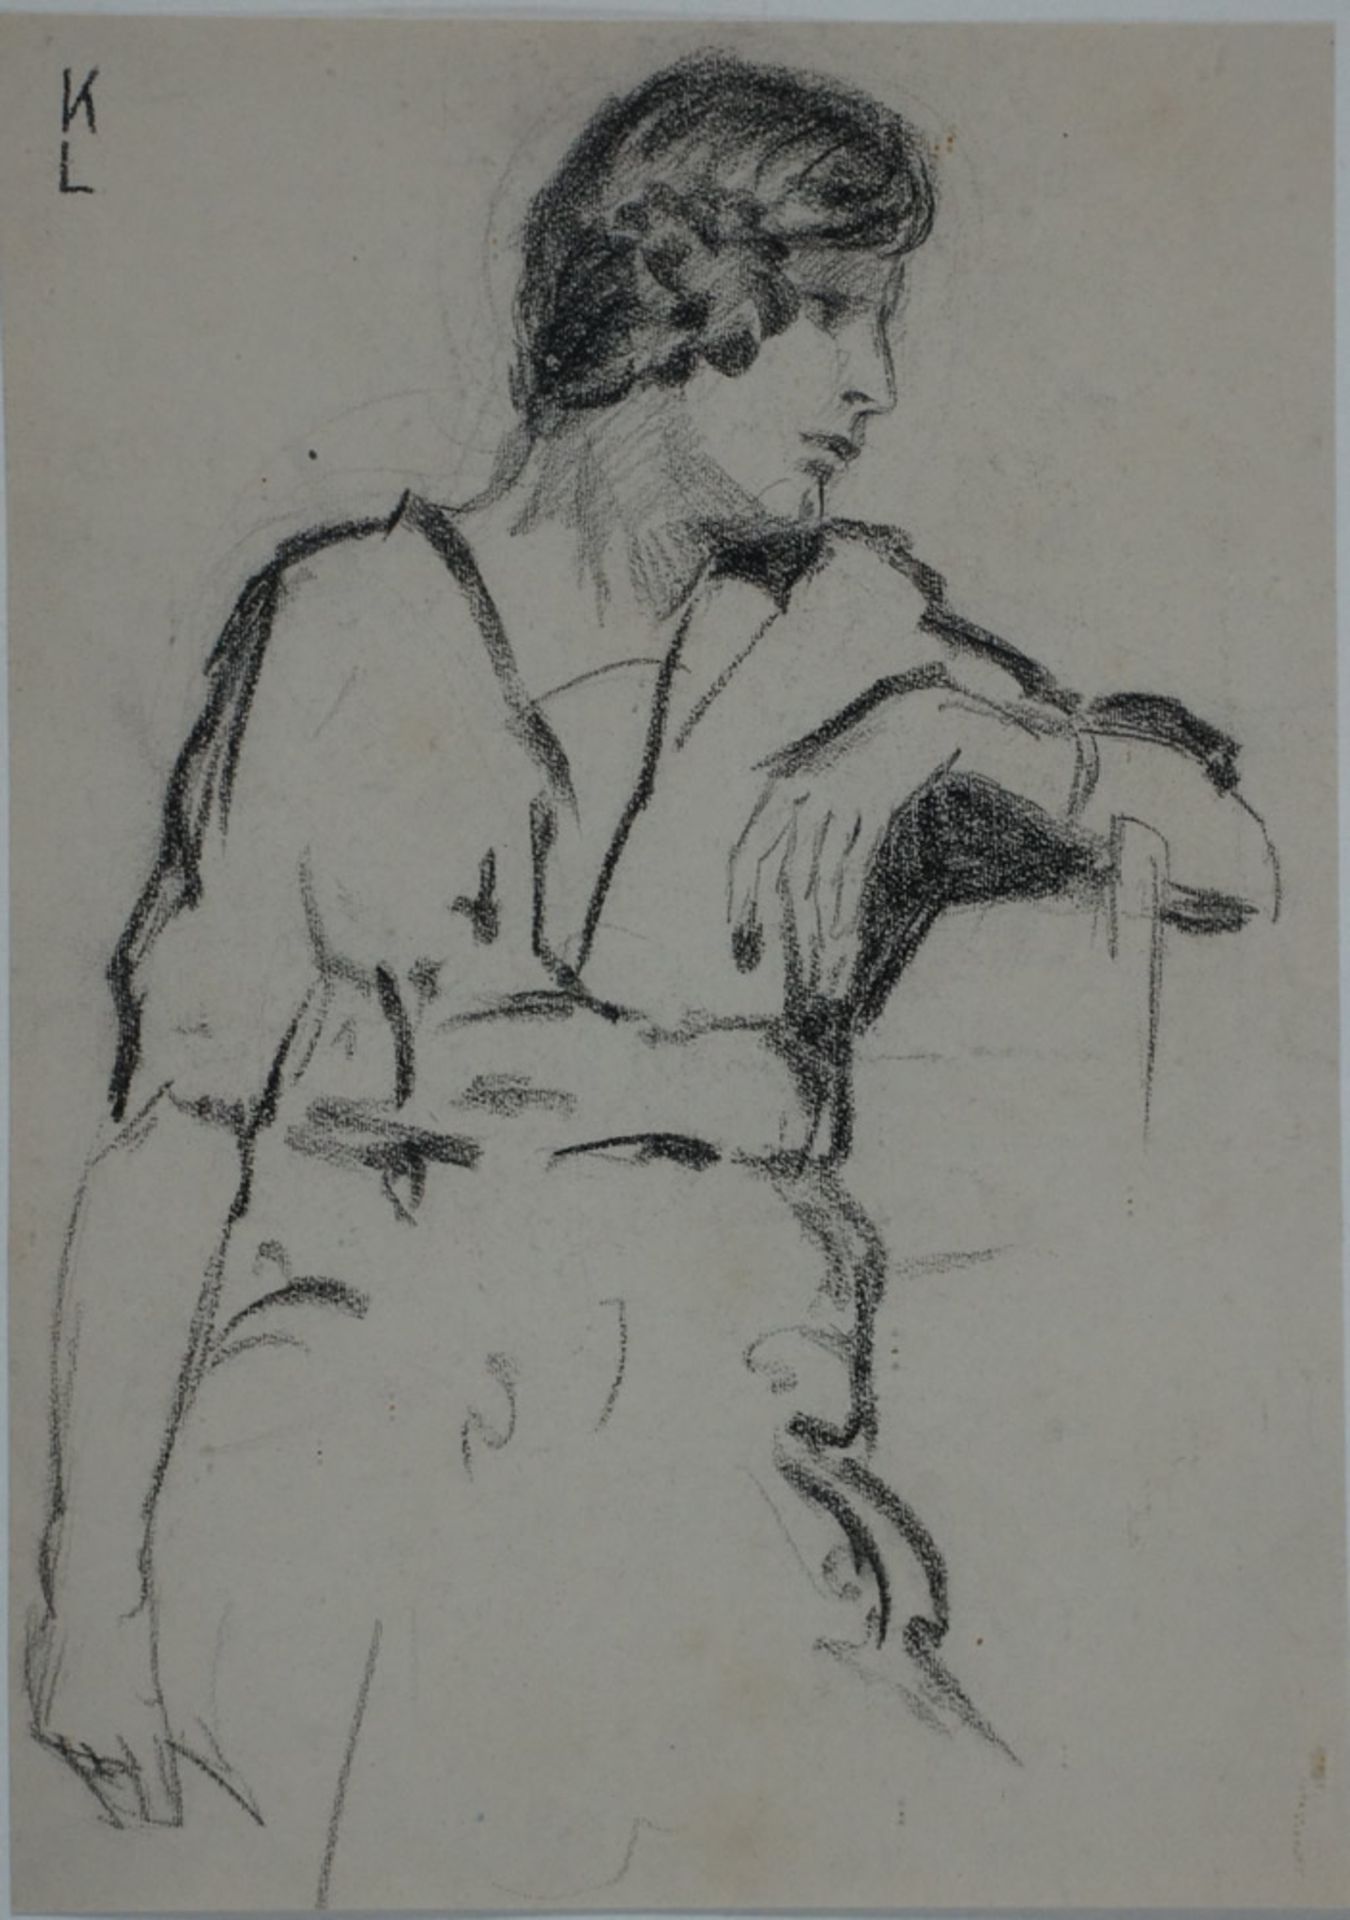 Löwenthal, Käthe, sitzende Frau, Kohle, 32 x 23 cm, monogr.